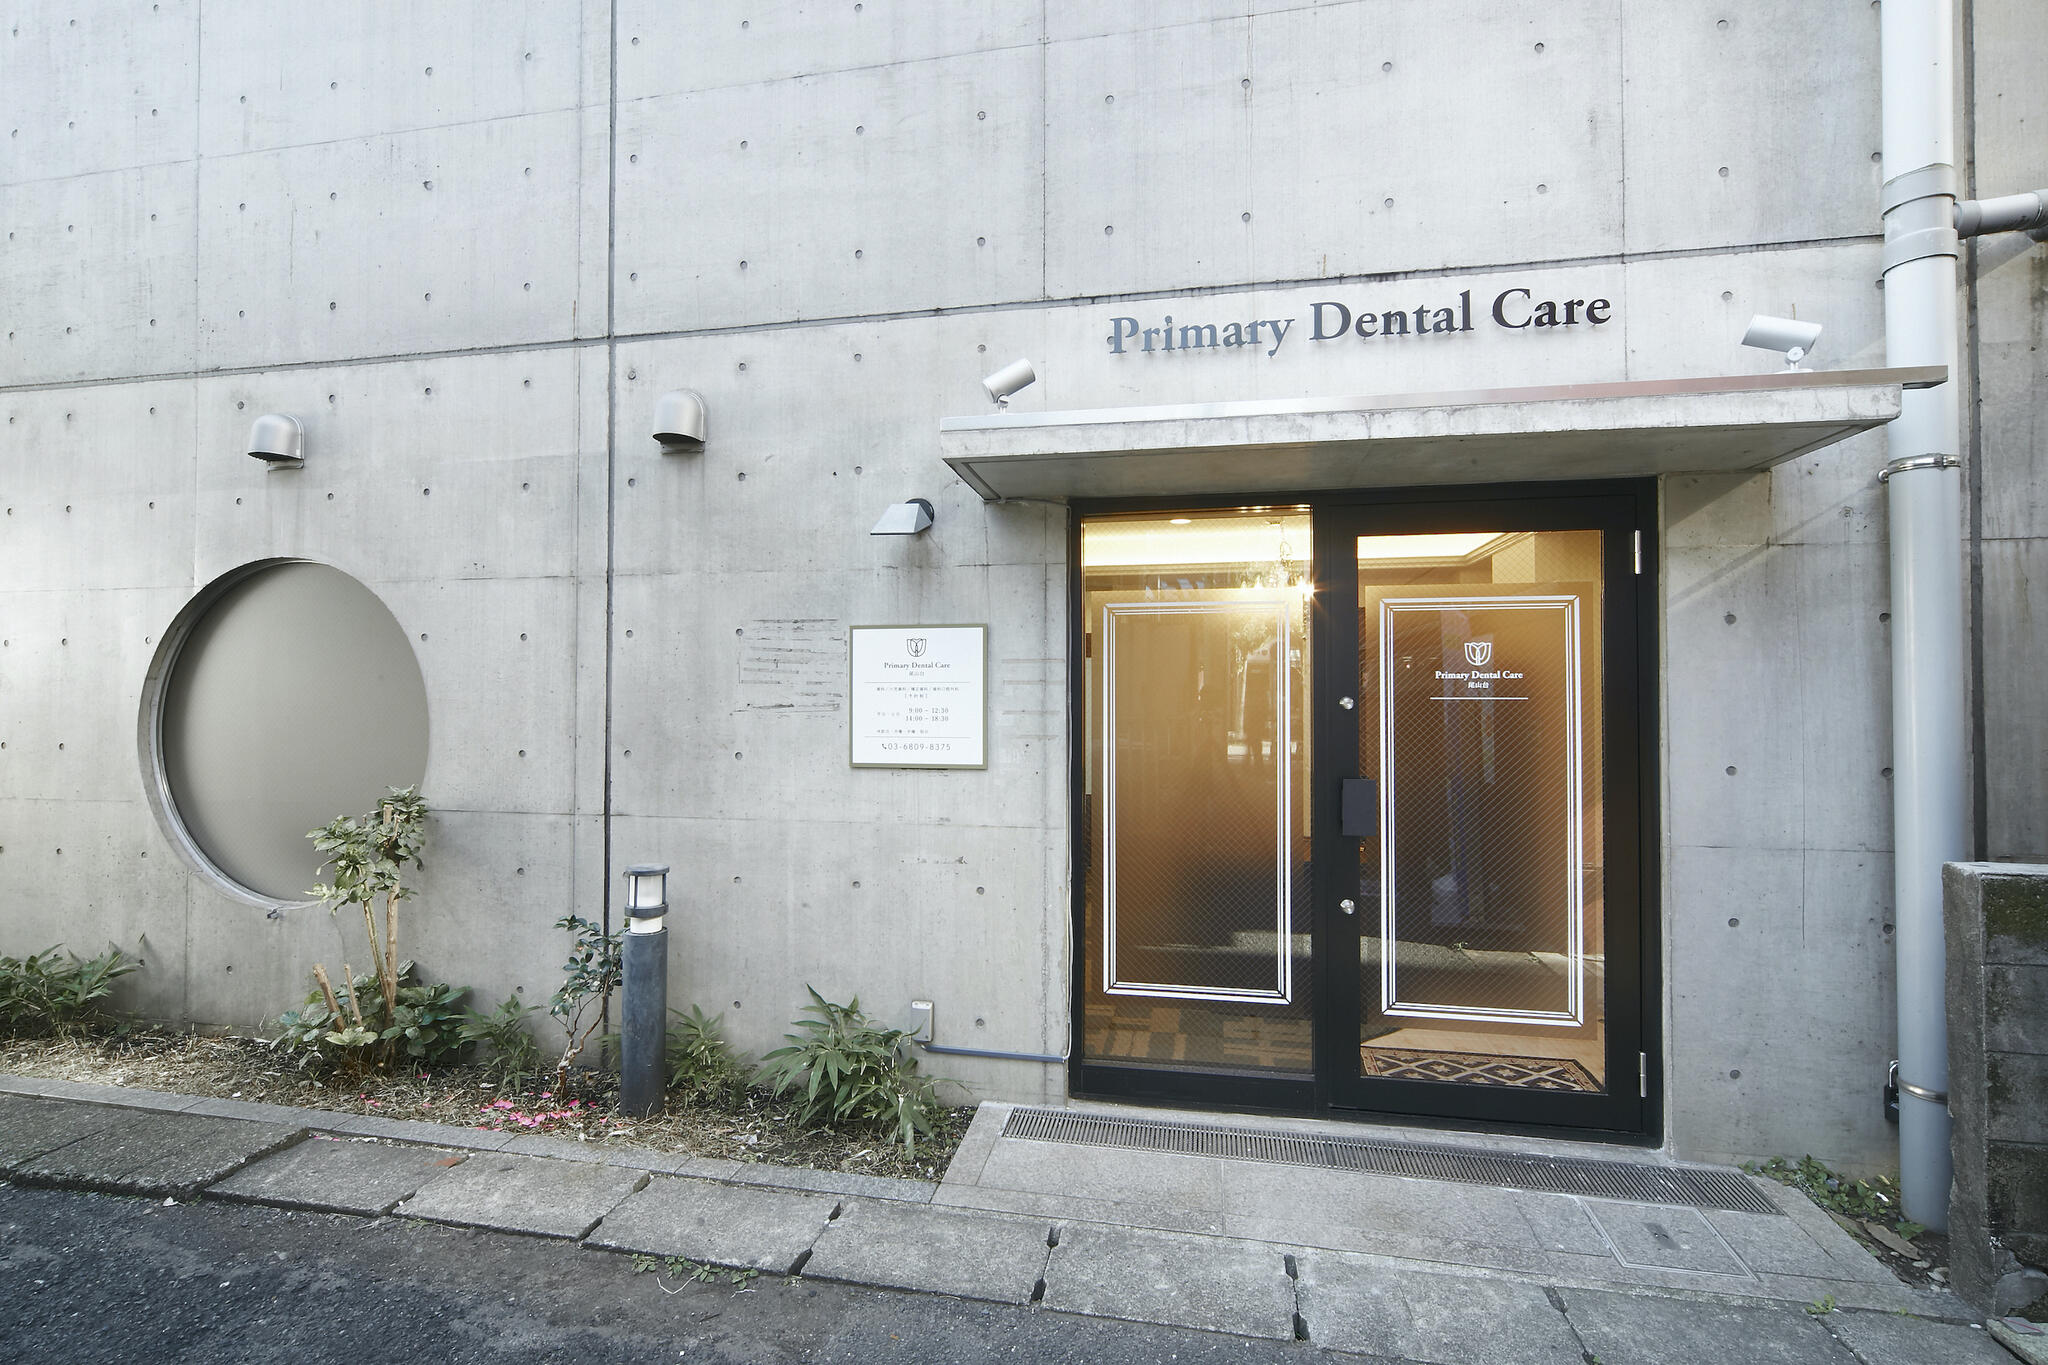 Primary Dental Care 尾山台の代表写真7